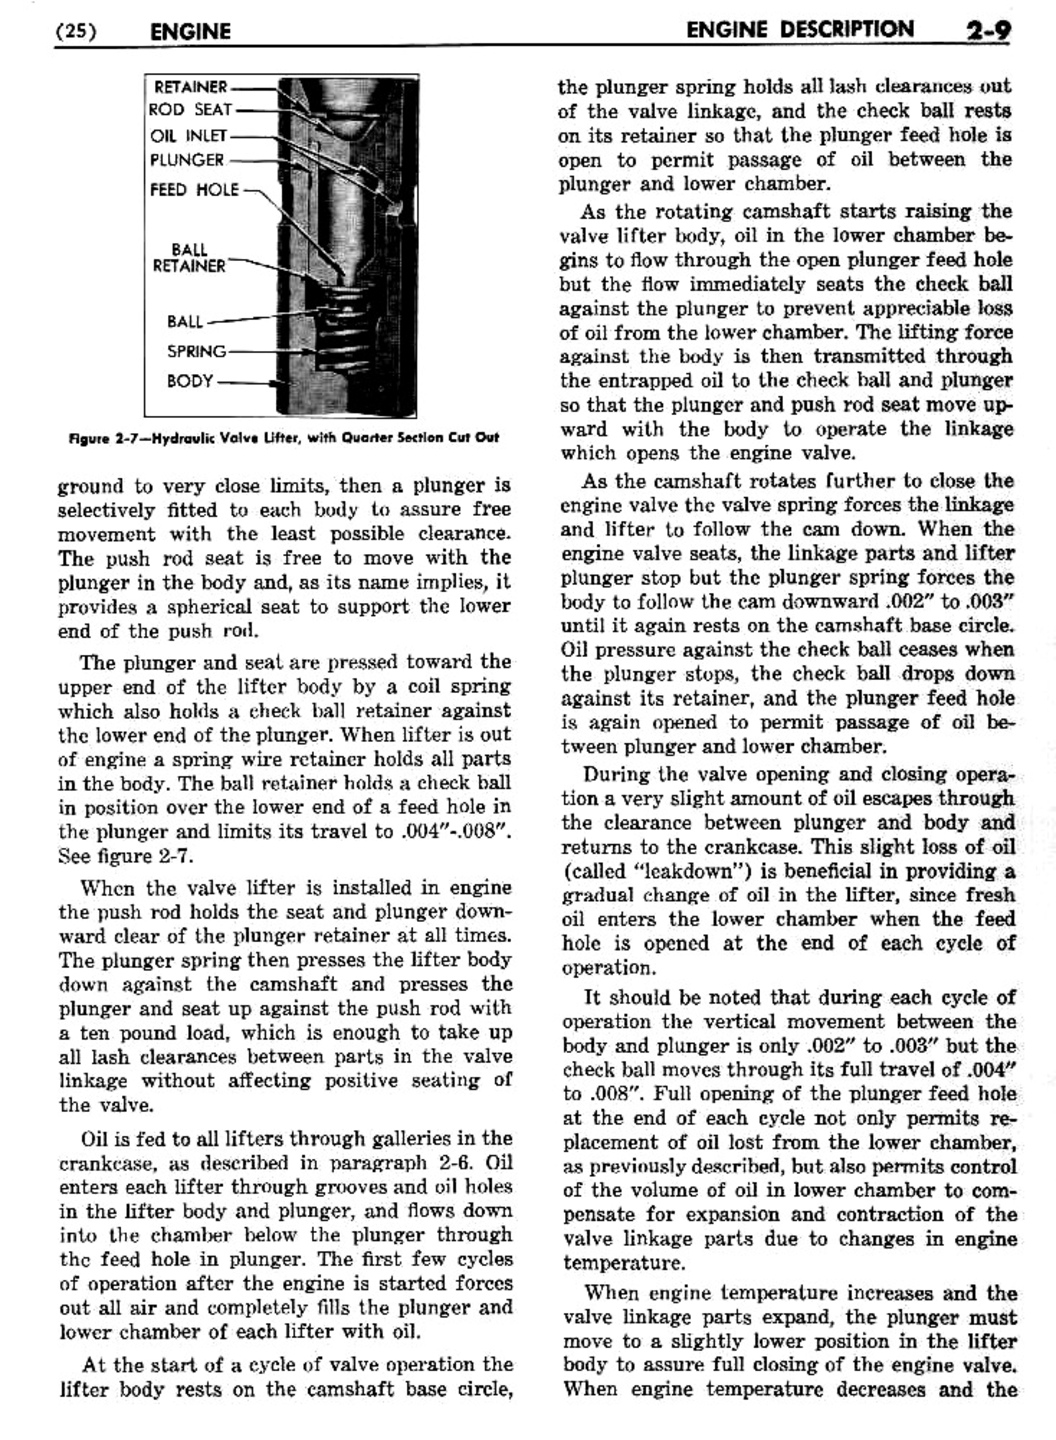 n_03 1955 Buick Shop Manual - Engine-009-009.jpg